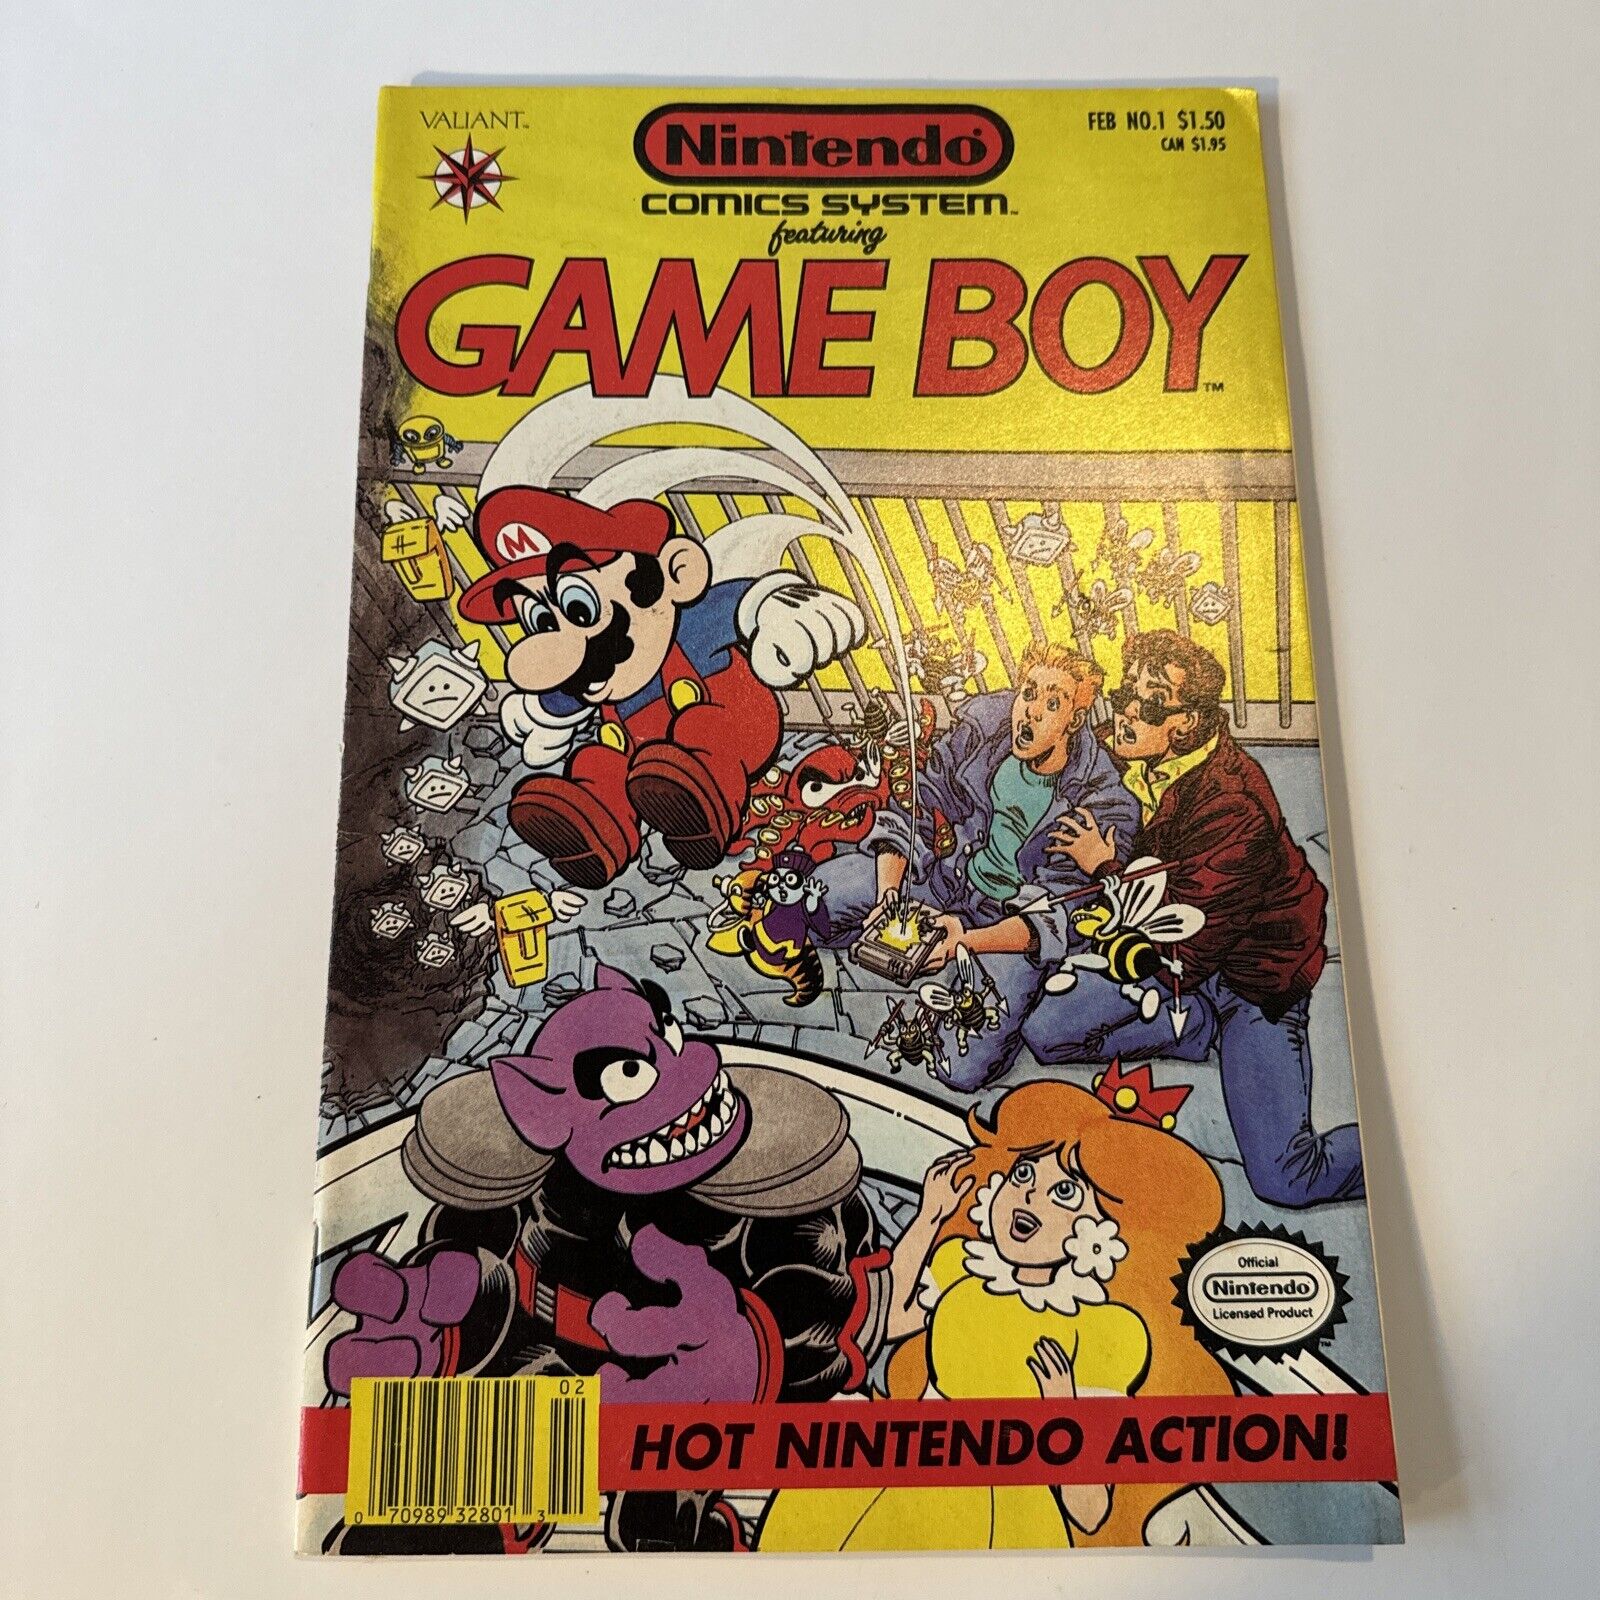 * Nintendo Comics System (2nd Series) # 1 * Valiant | Game Boy Super Mario Bros.